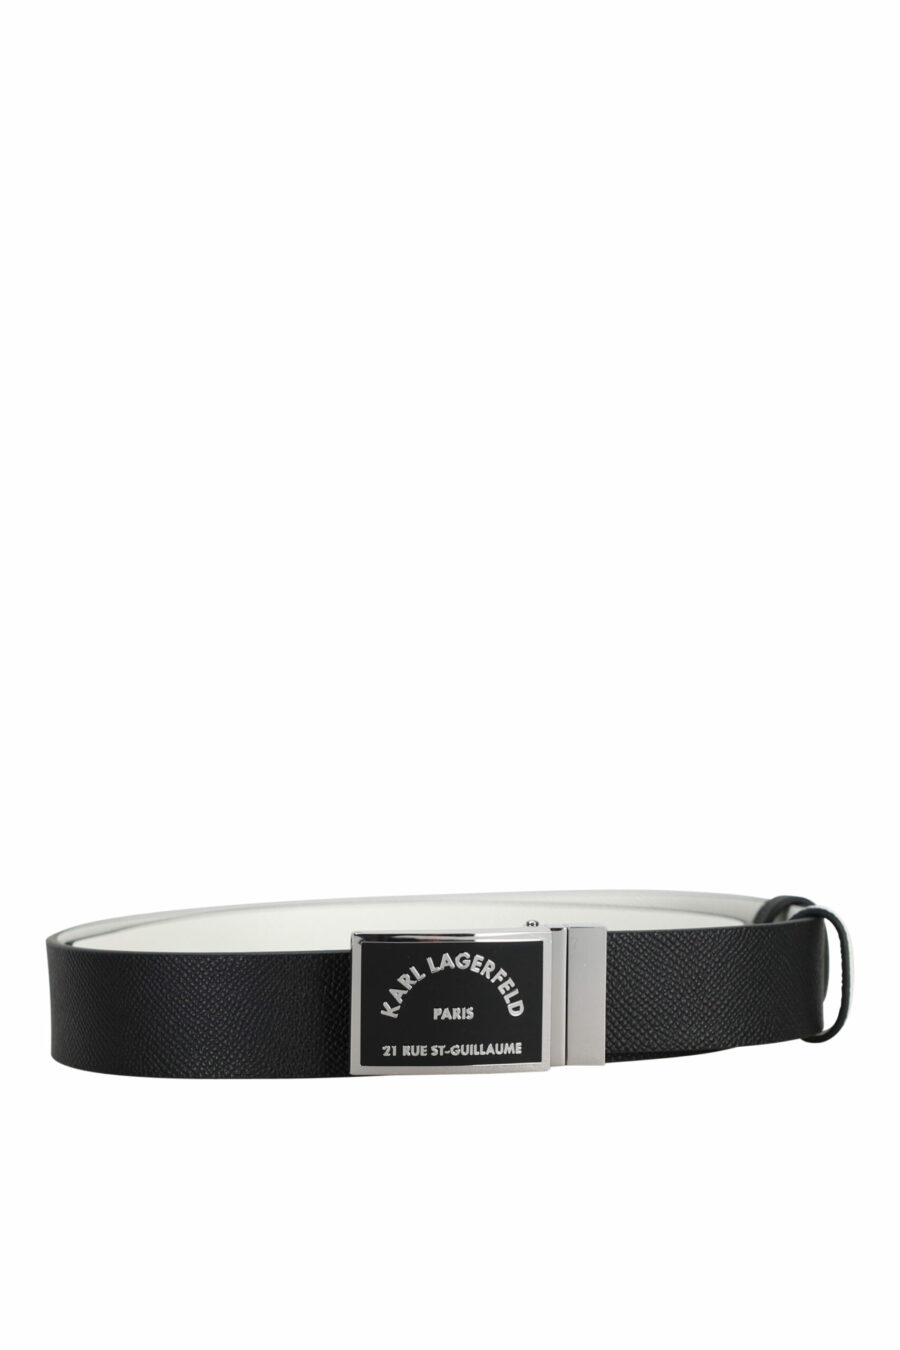 Cinturón reversible negro con logo "rue st guillaume" en placa - 8720744416890 scaled